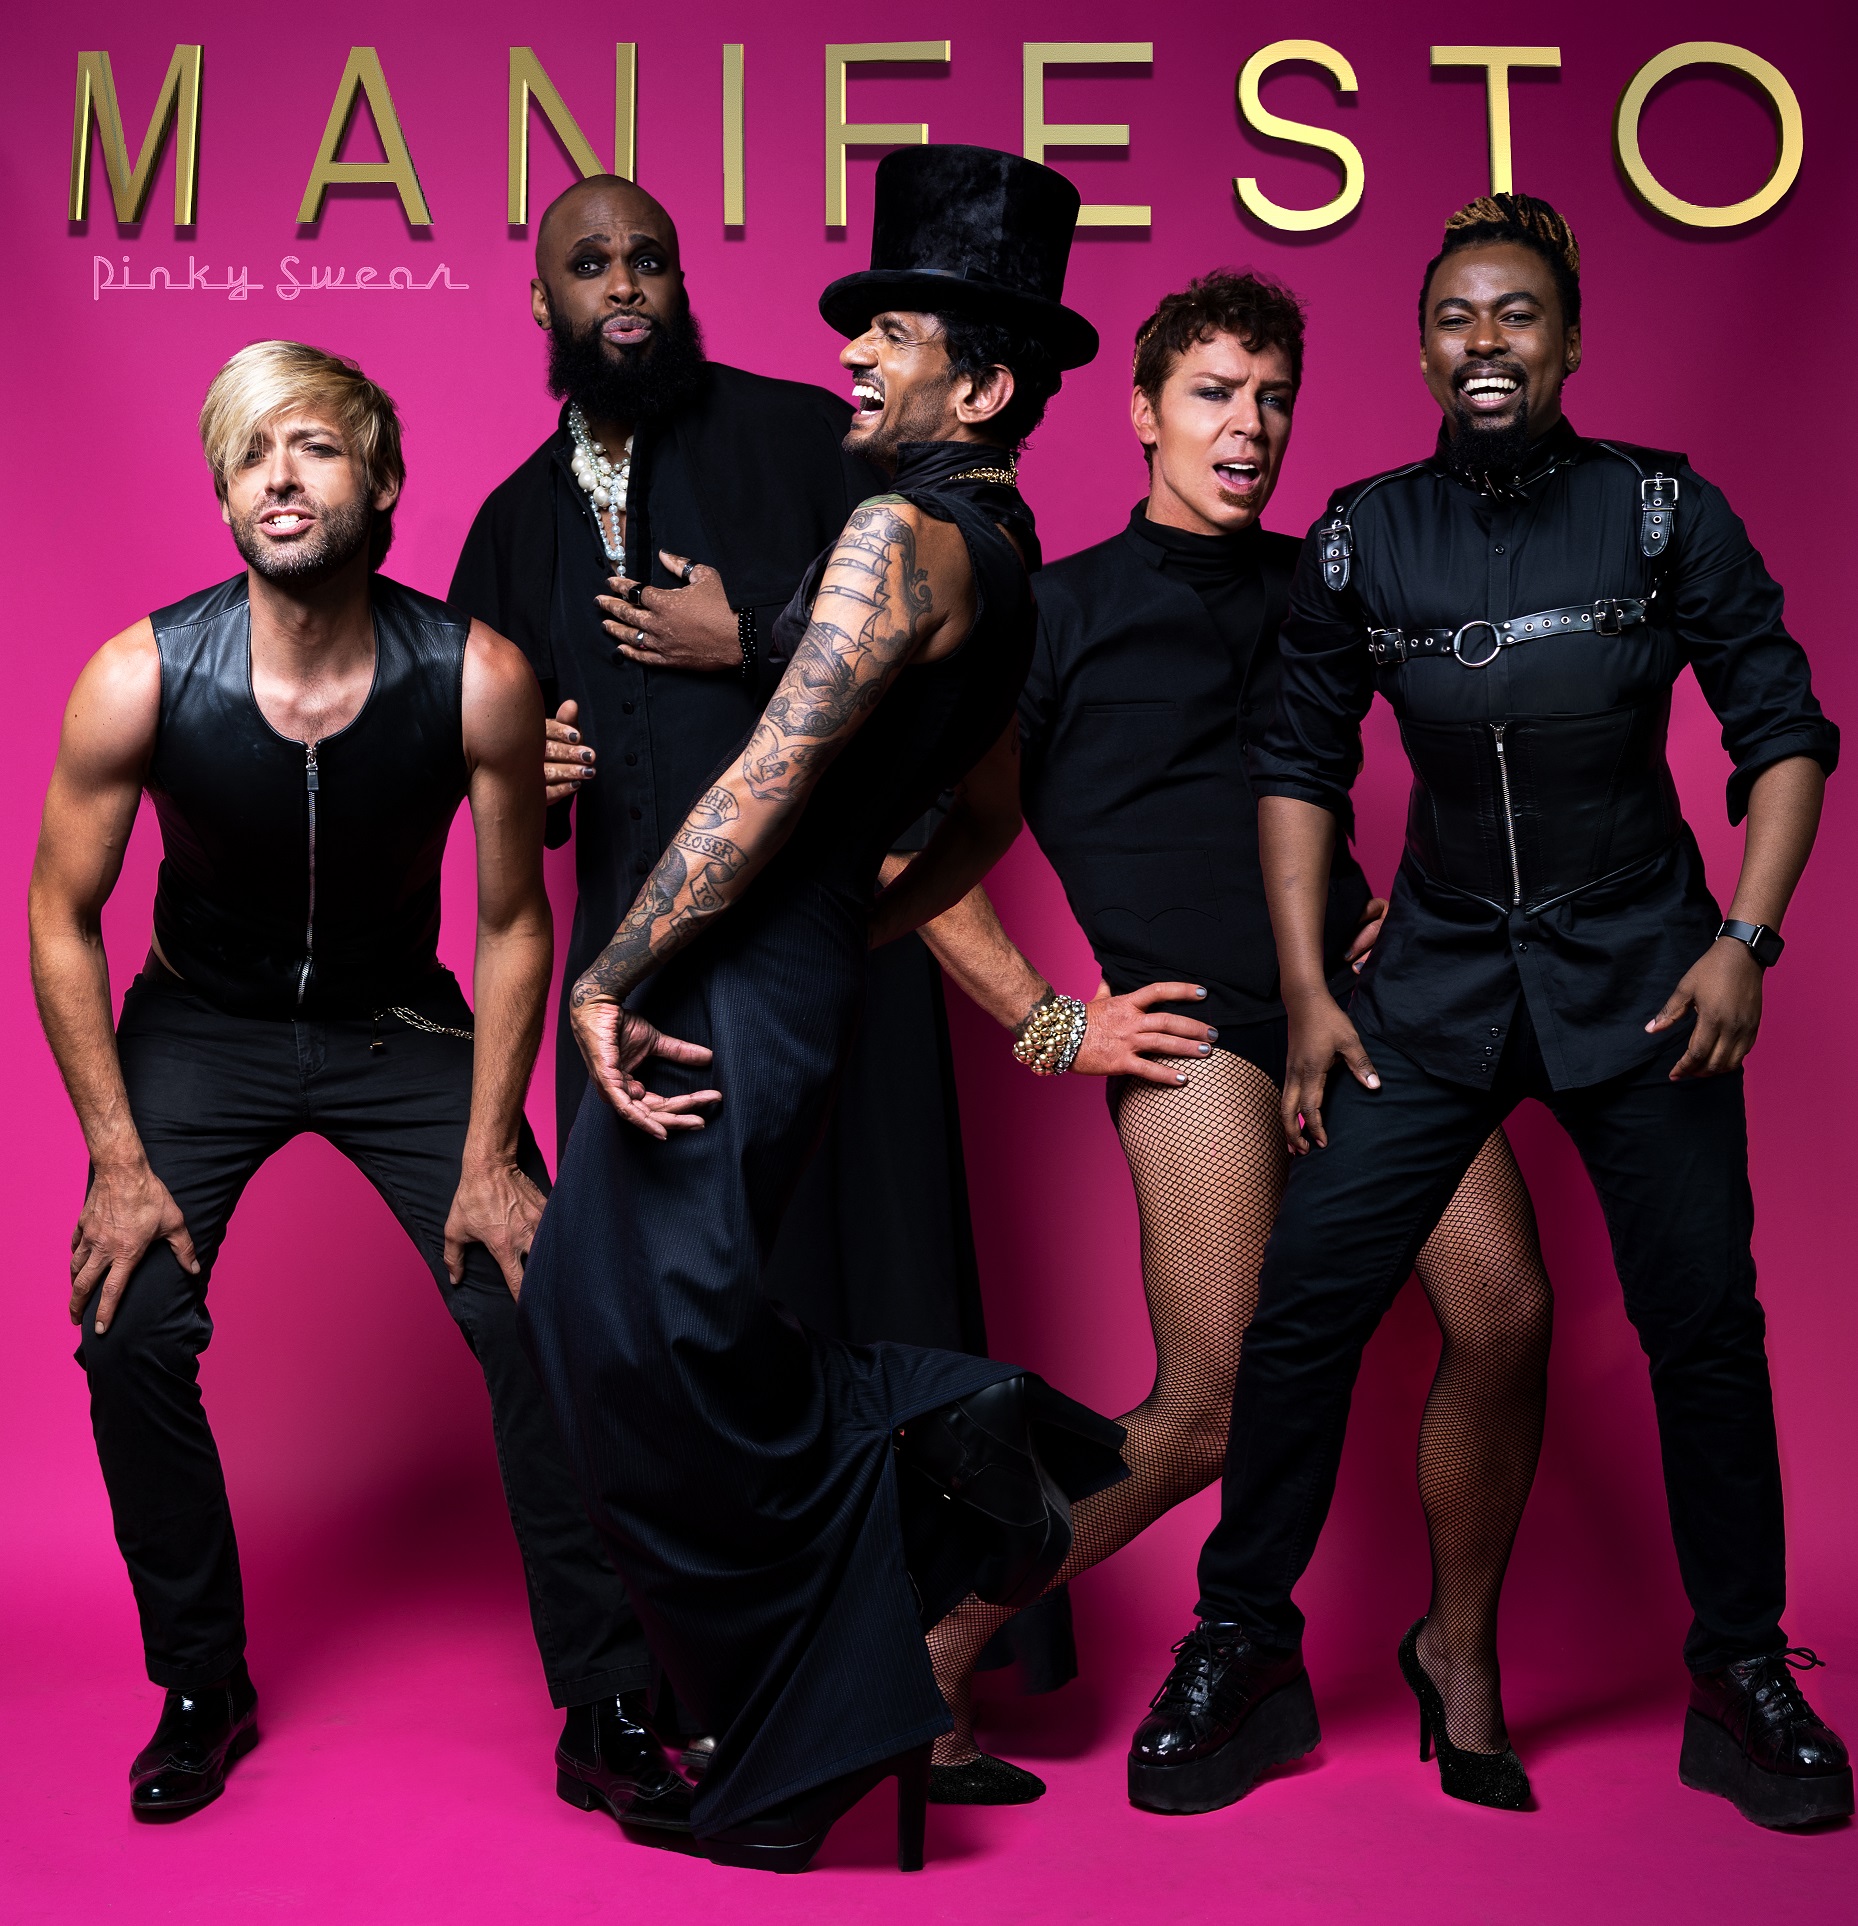 Manifesto album cover Pinky Swear